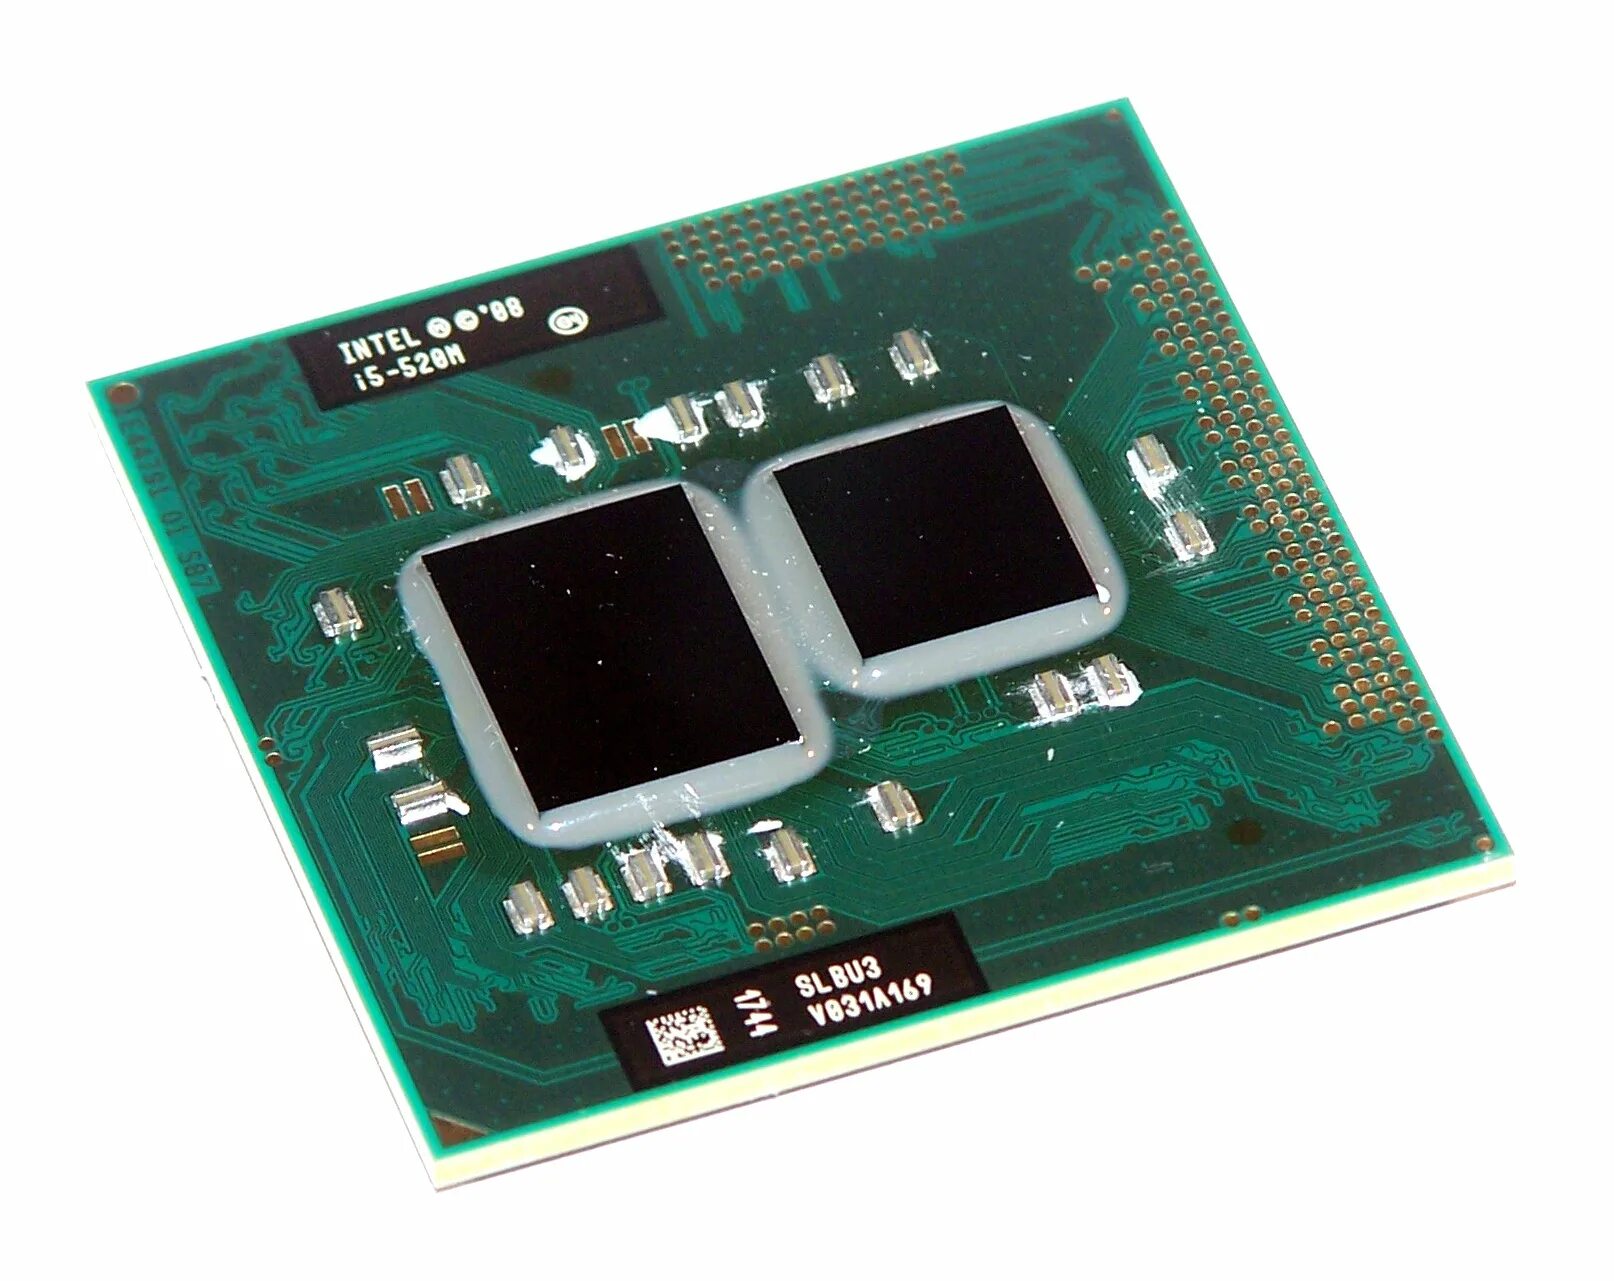 Core i5 520m. Intel Core i5-520m (pga988). Процессор для ноутбука Intel Core i5. Процессор Intel Core i5 450m для ноутбука. Модель процессора ноутбука